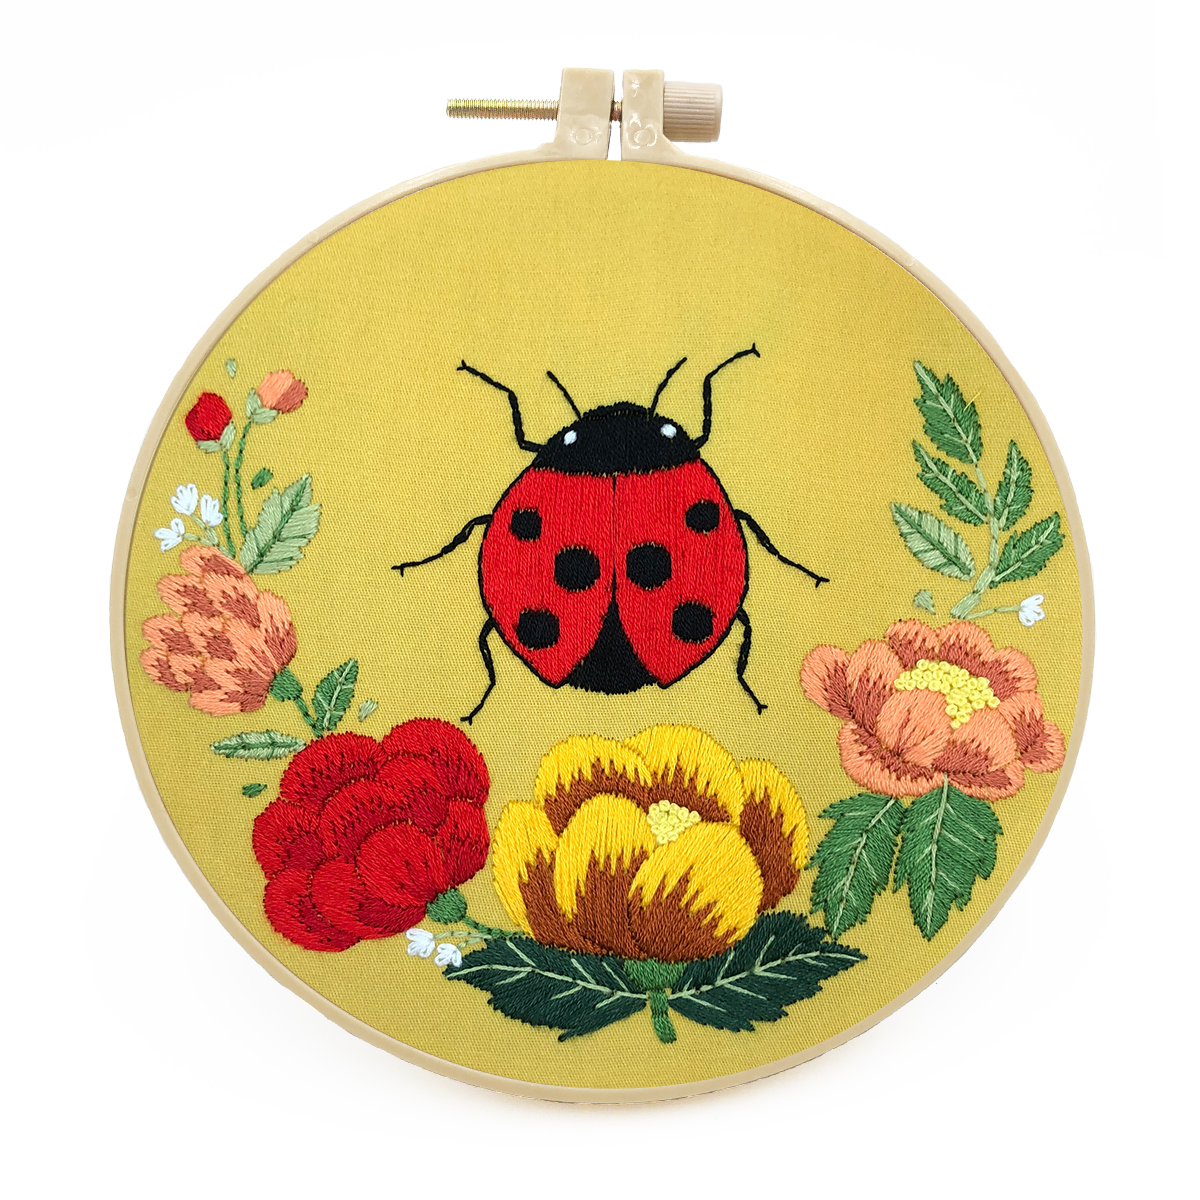 Embroidery Starter Kit Cross stitch kit for Adult Beginner -Red Ladybug pattern